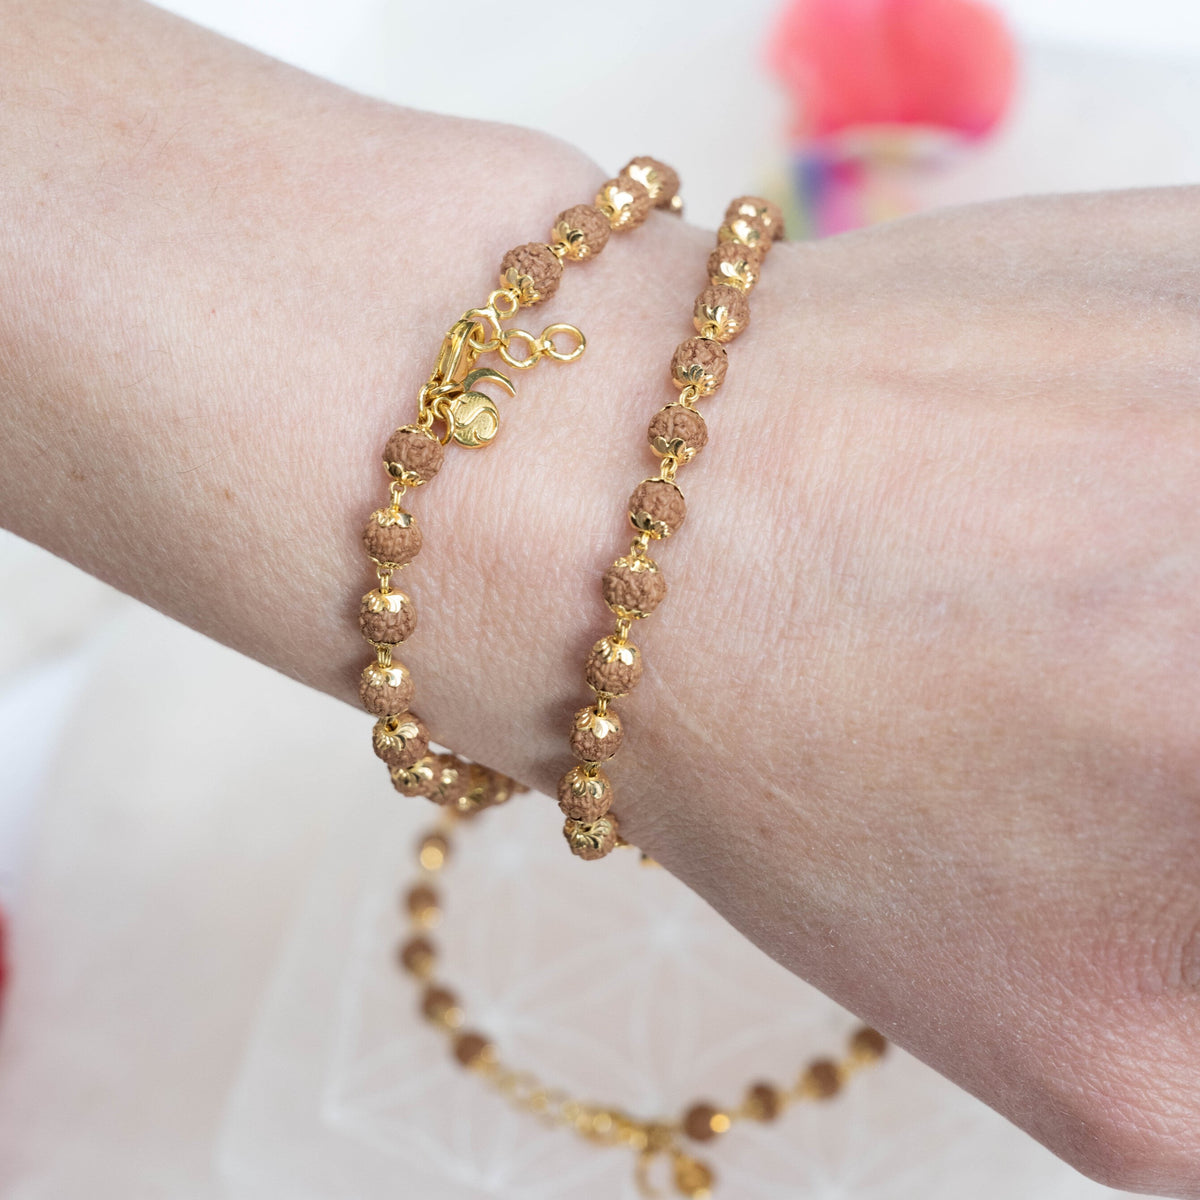 22 Kt yellow gold rudraksha bracelet , stylish customized personalized  jewelry | eBay